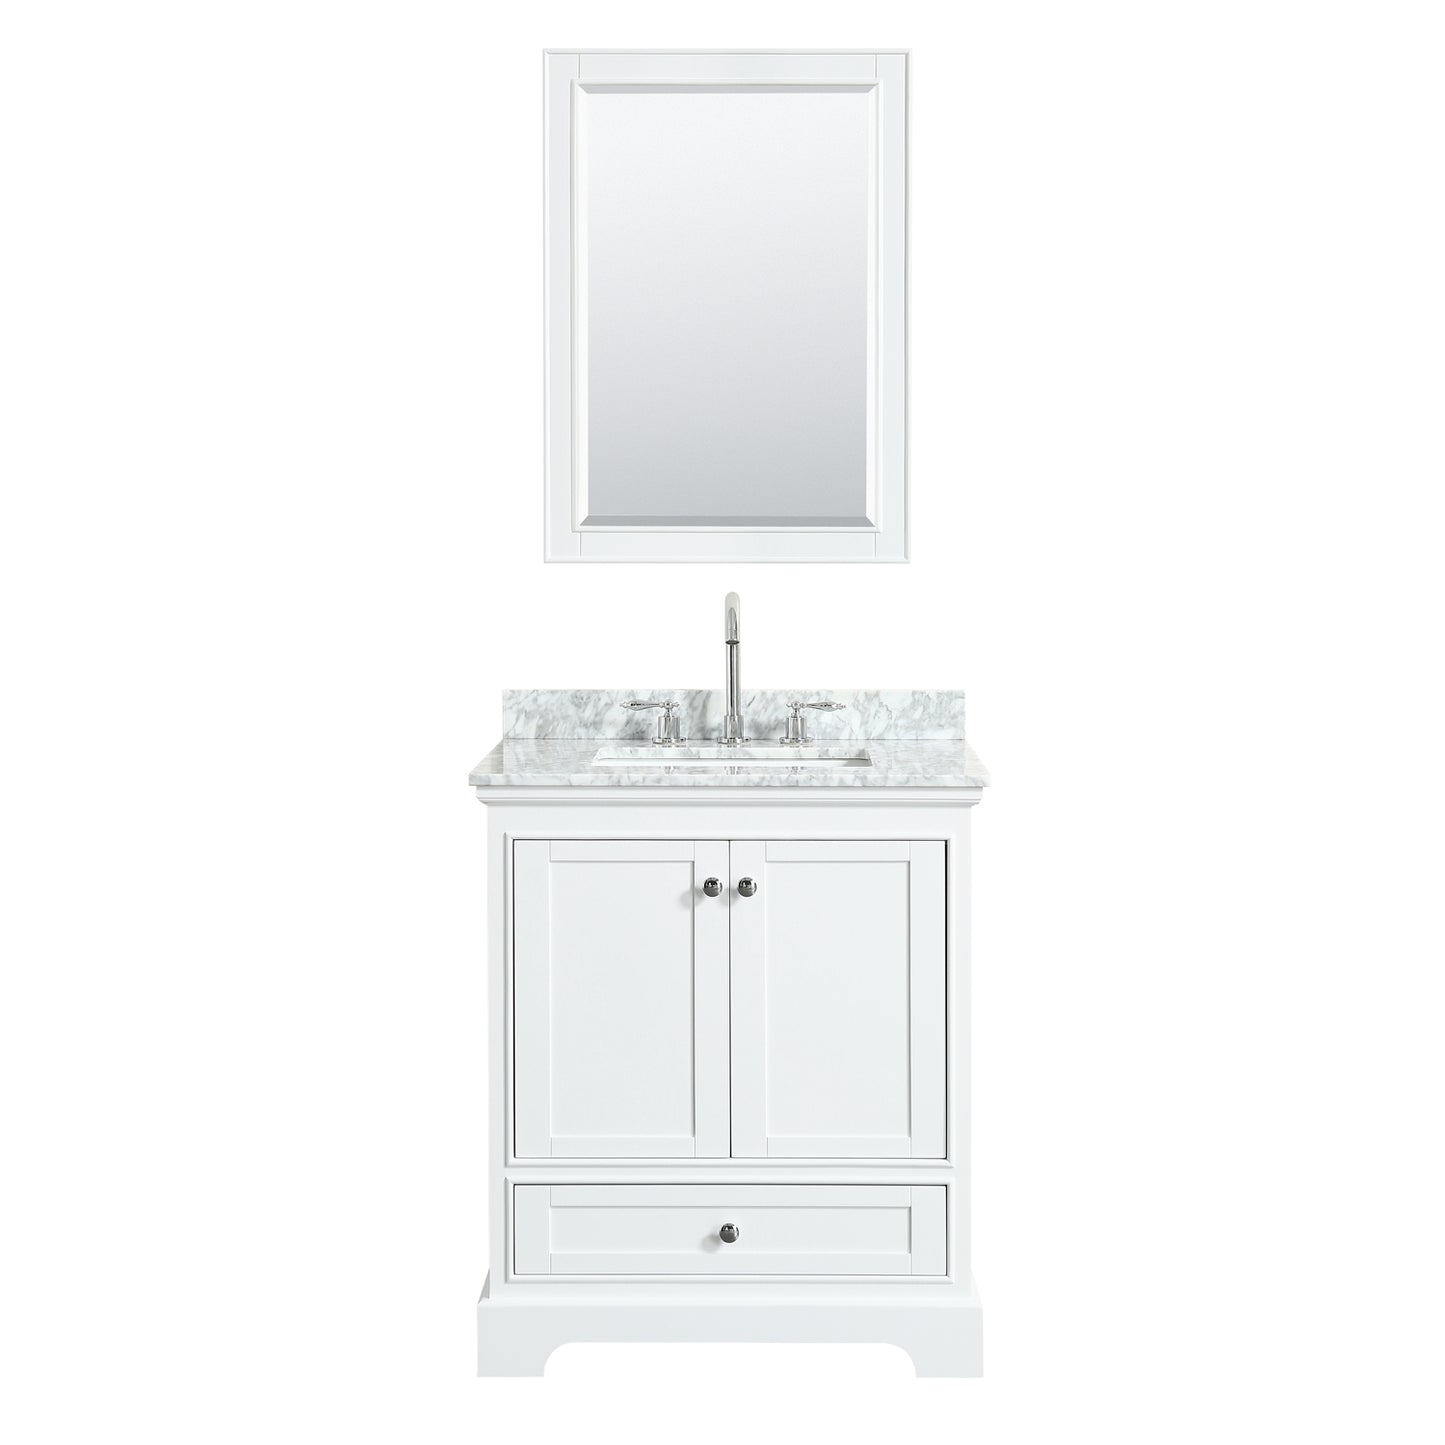 30 Inch Single Bathroom Vanity, White Carrara Marble Countertop, Undermount Square Sink, and Medicine Cabinet - Luxe Bathroom Vanities Luxury Bathroom Fixtures Bathroom Furniture